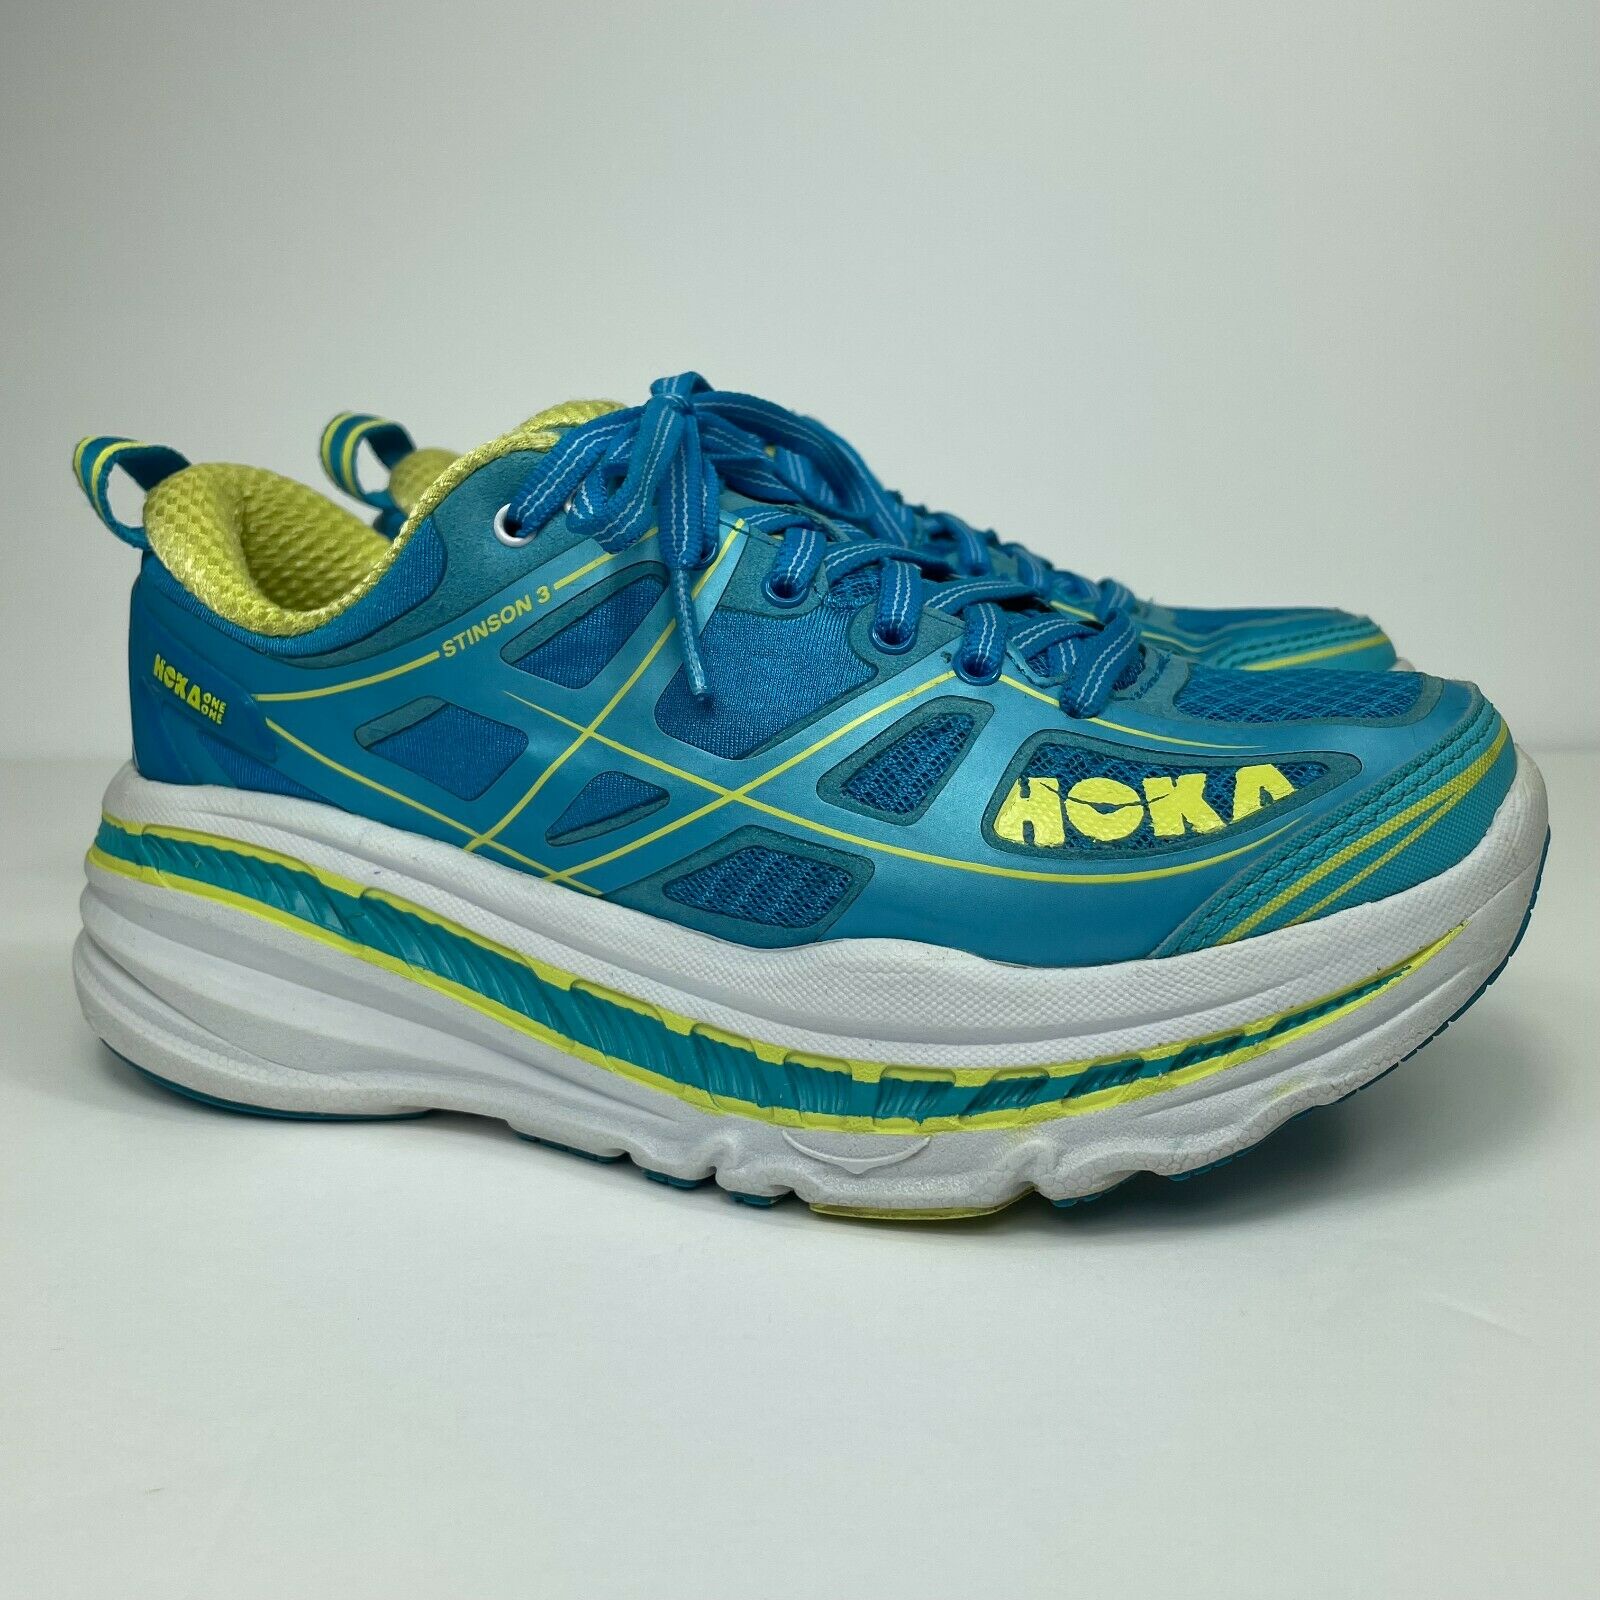 Hoka One One Stinson 3 Women's Sz 5.5 Athletic Running Walking Shoes Blue/Yellow